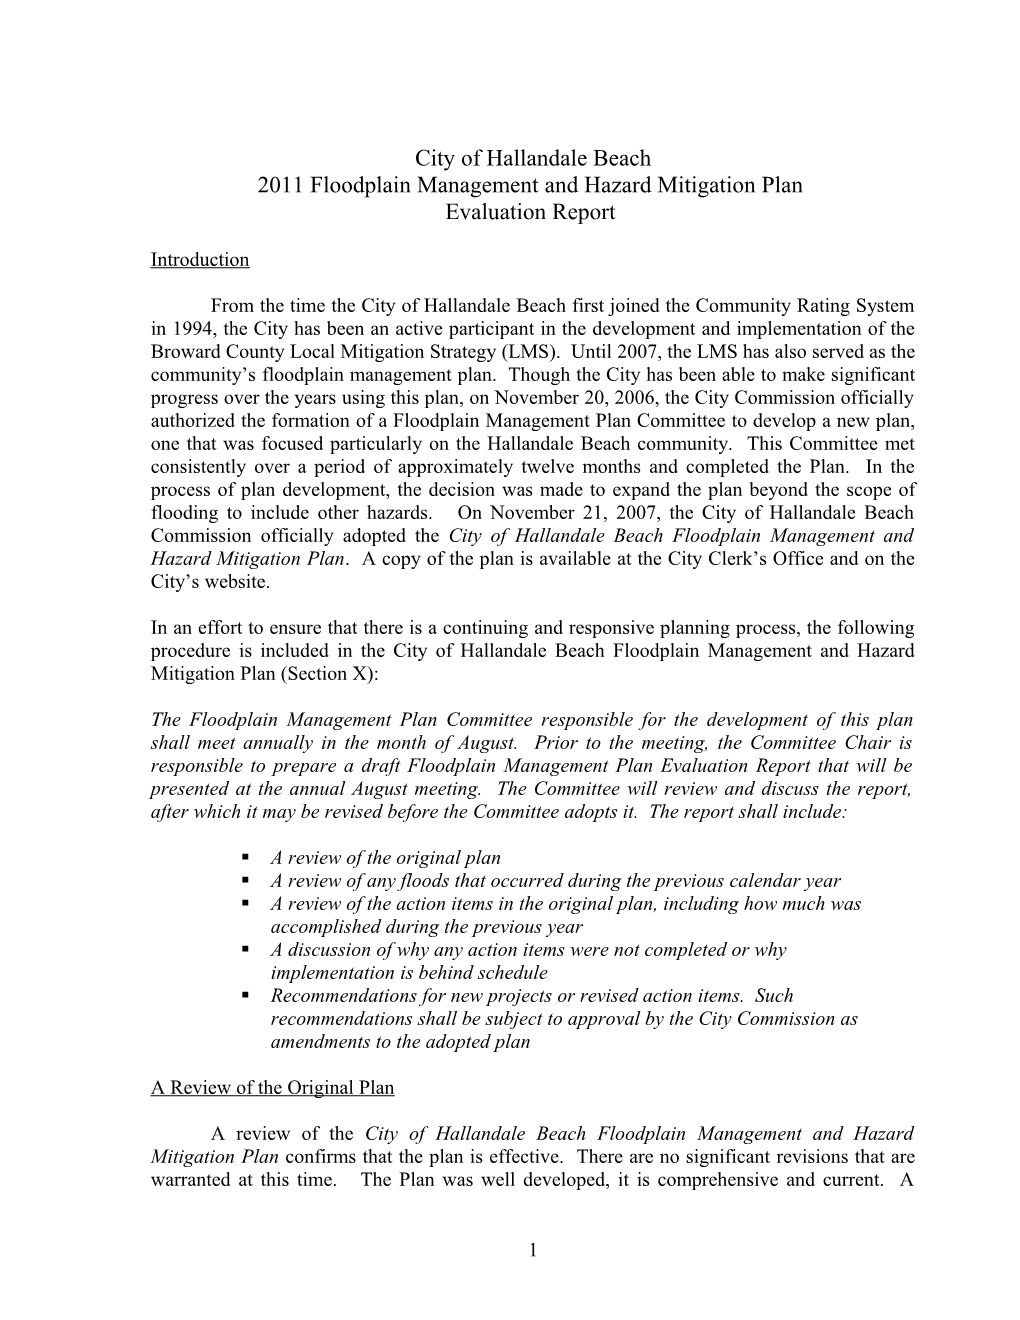 2011Floodplain Management and Hazard Mitigation Plan Evaluation Report